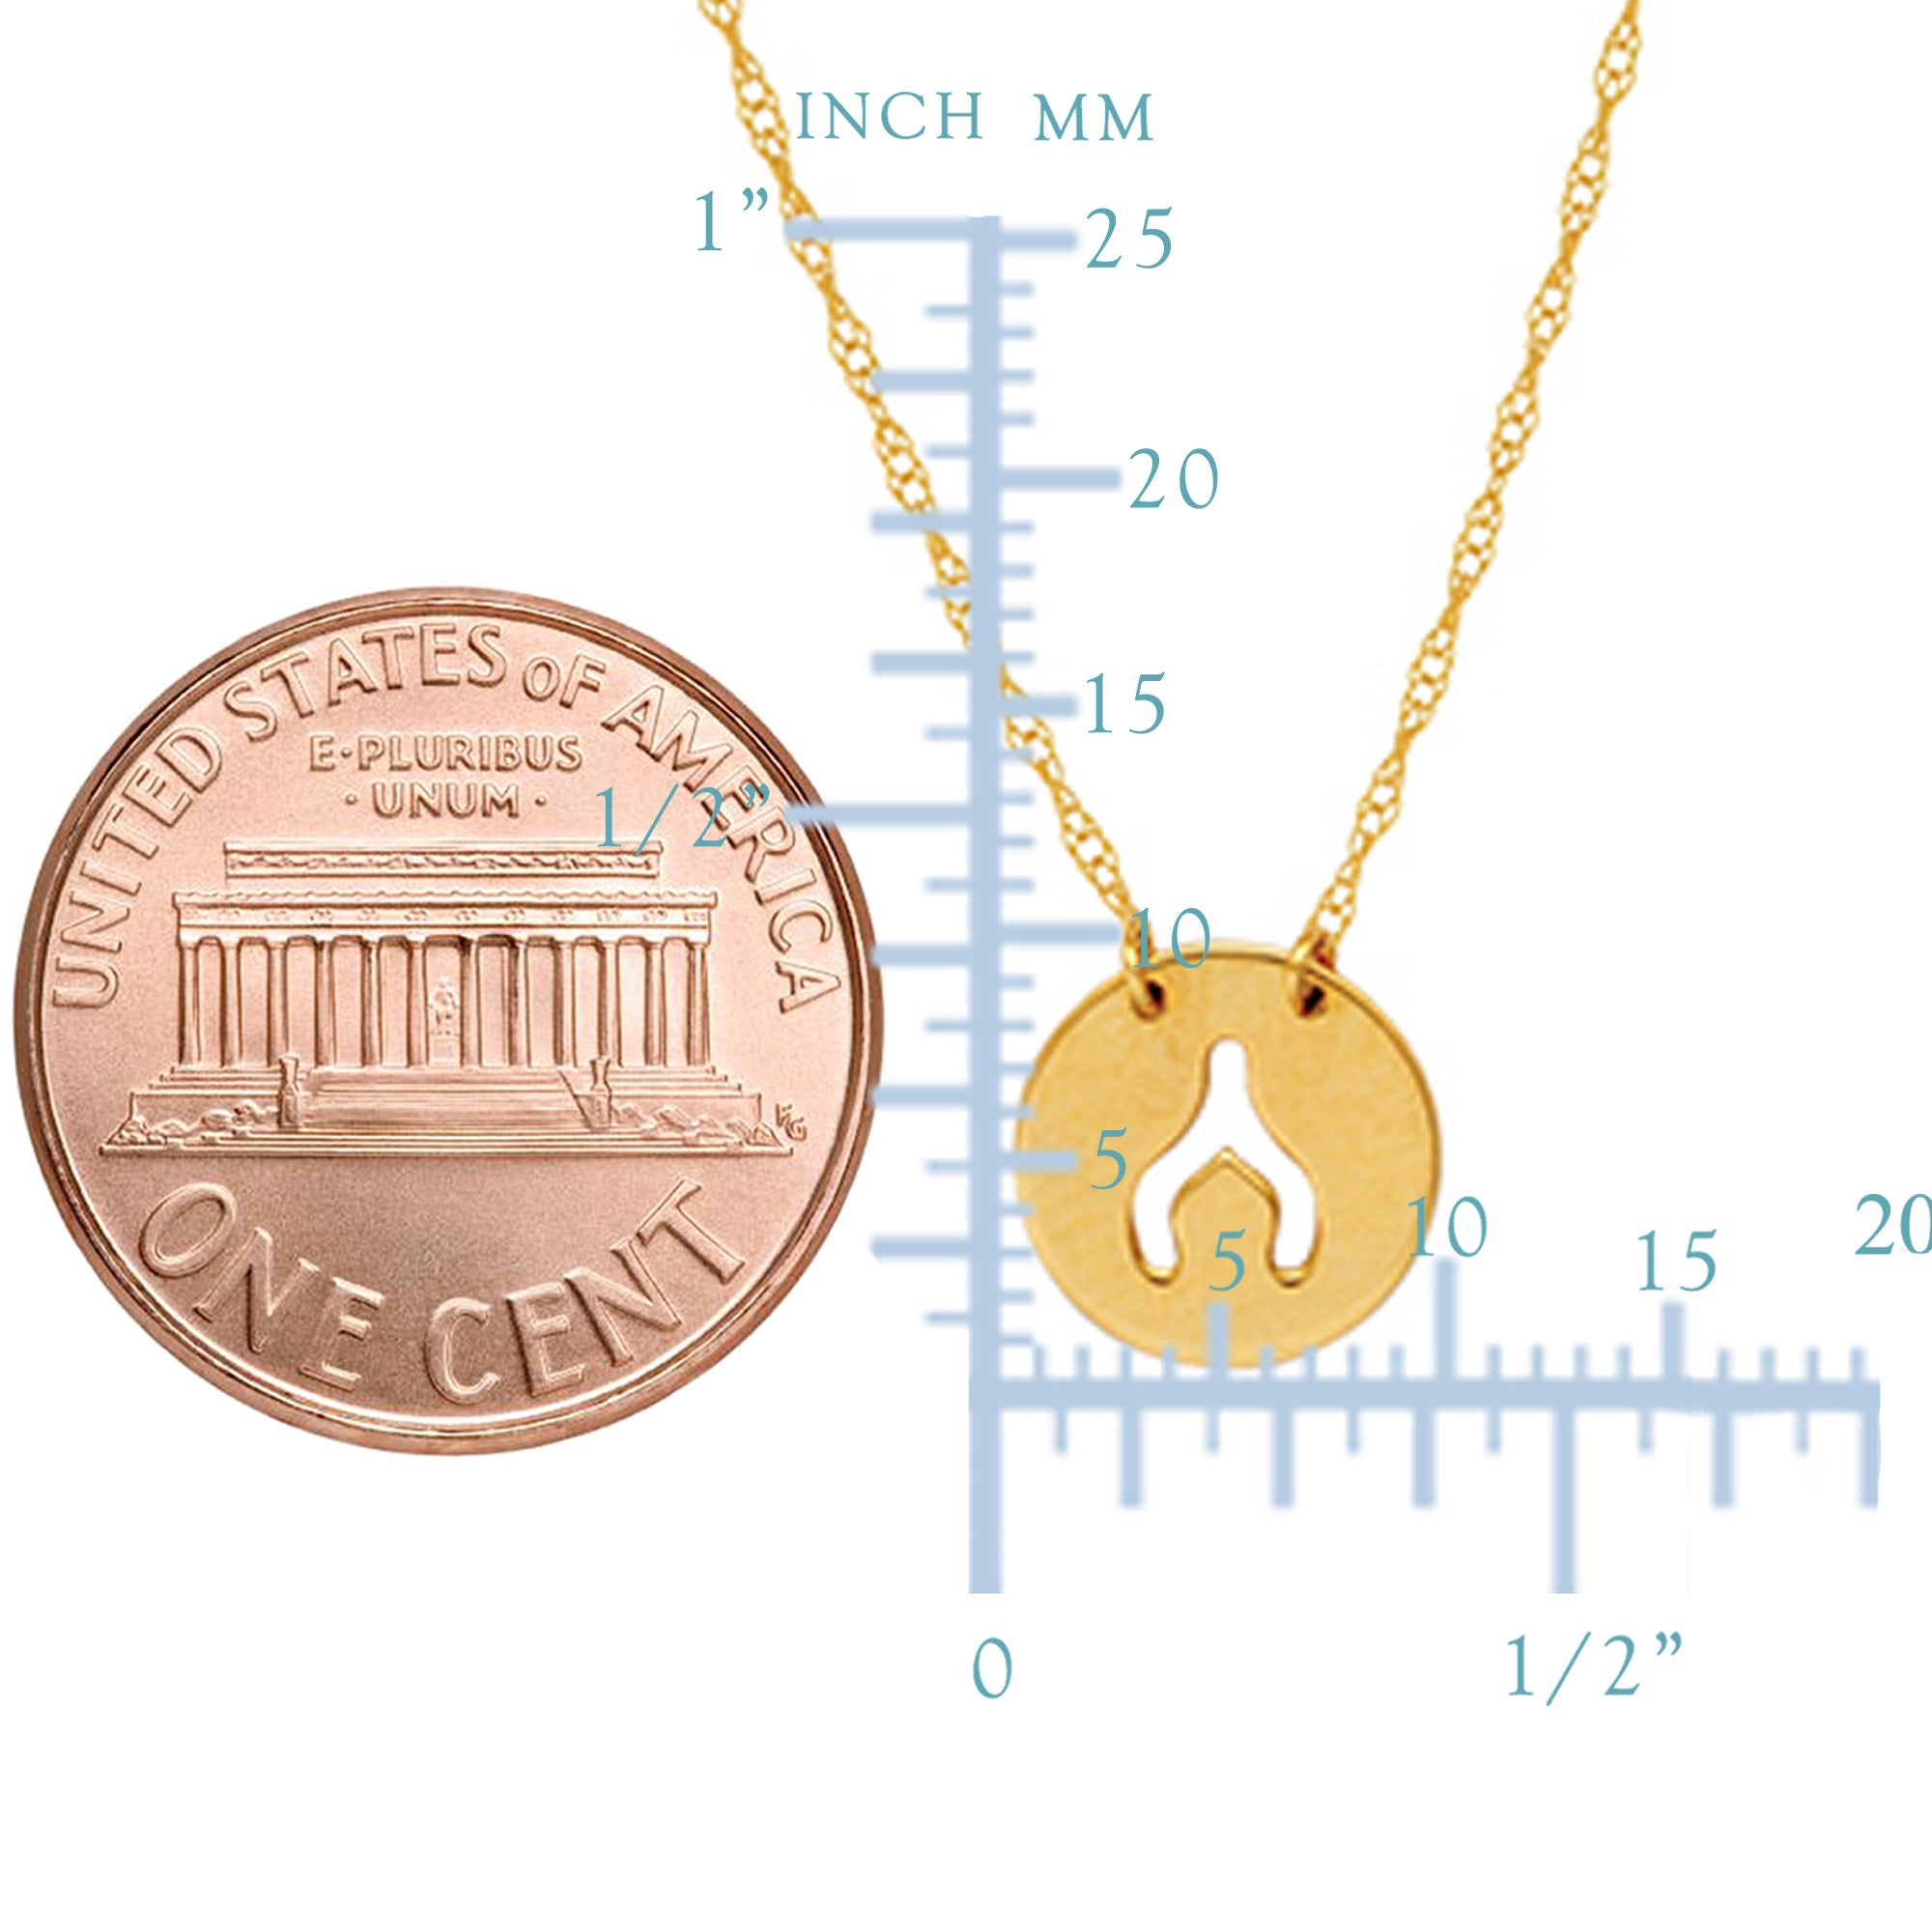 14K Yellow Gold Mini Wishbone Pendant Necklace, 16" To 18" Adjustable